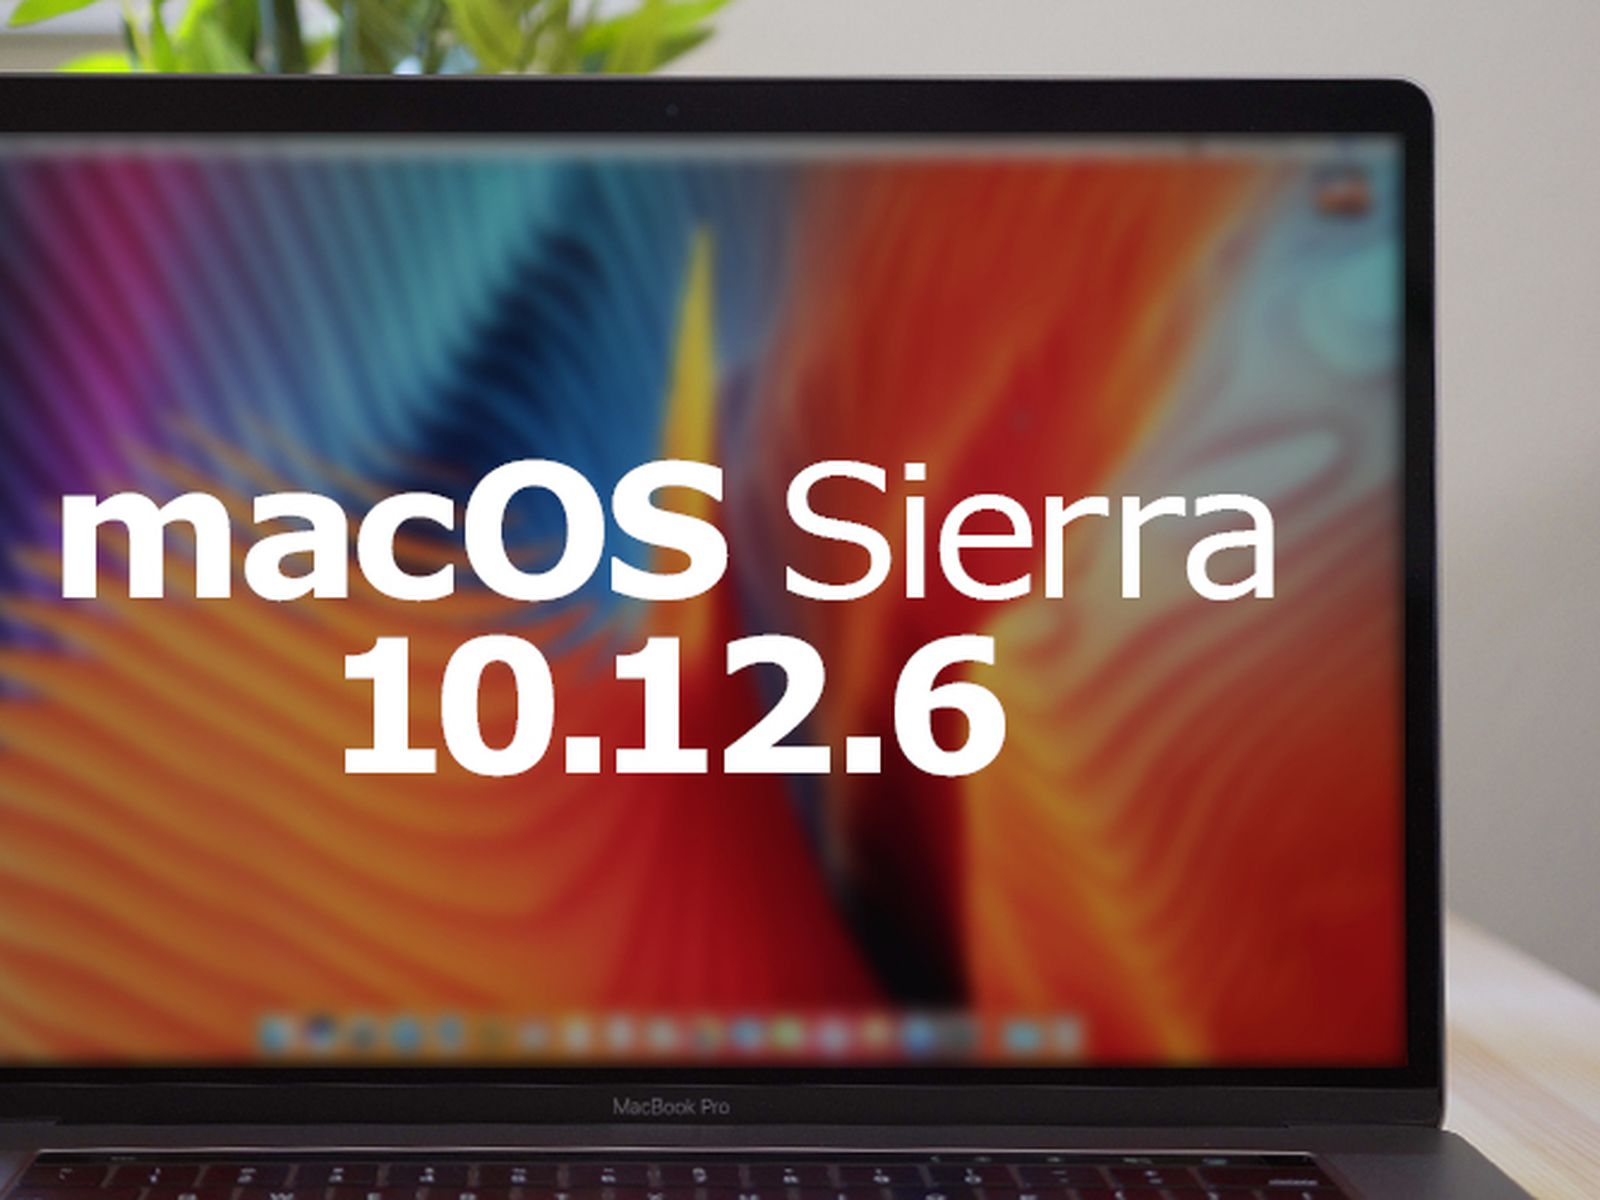 mac update 10.12 6 download